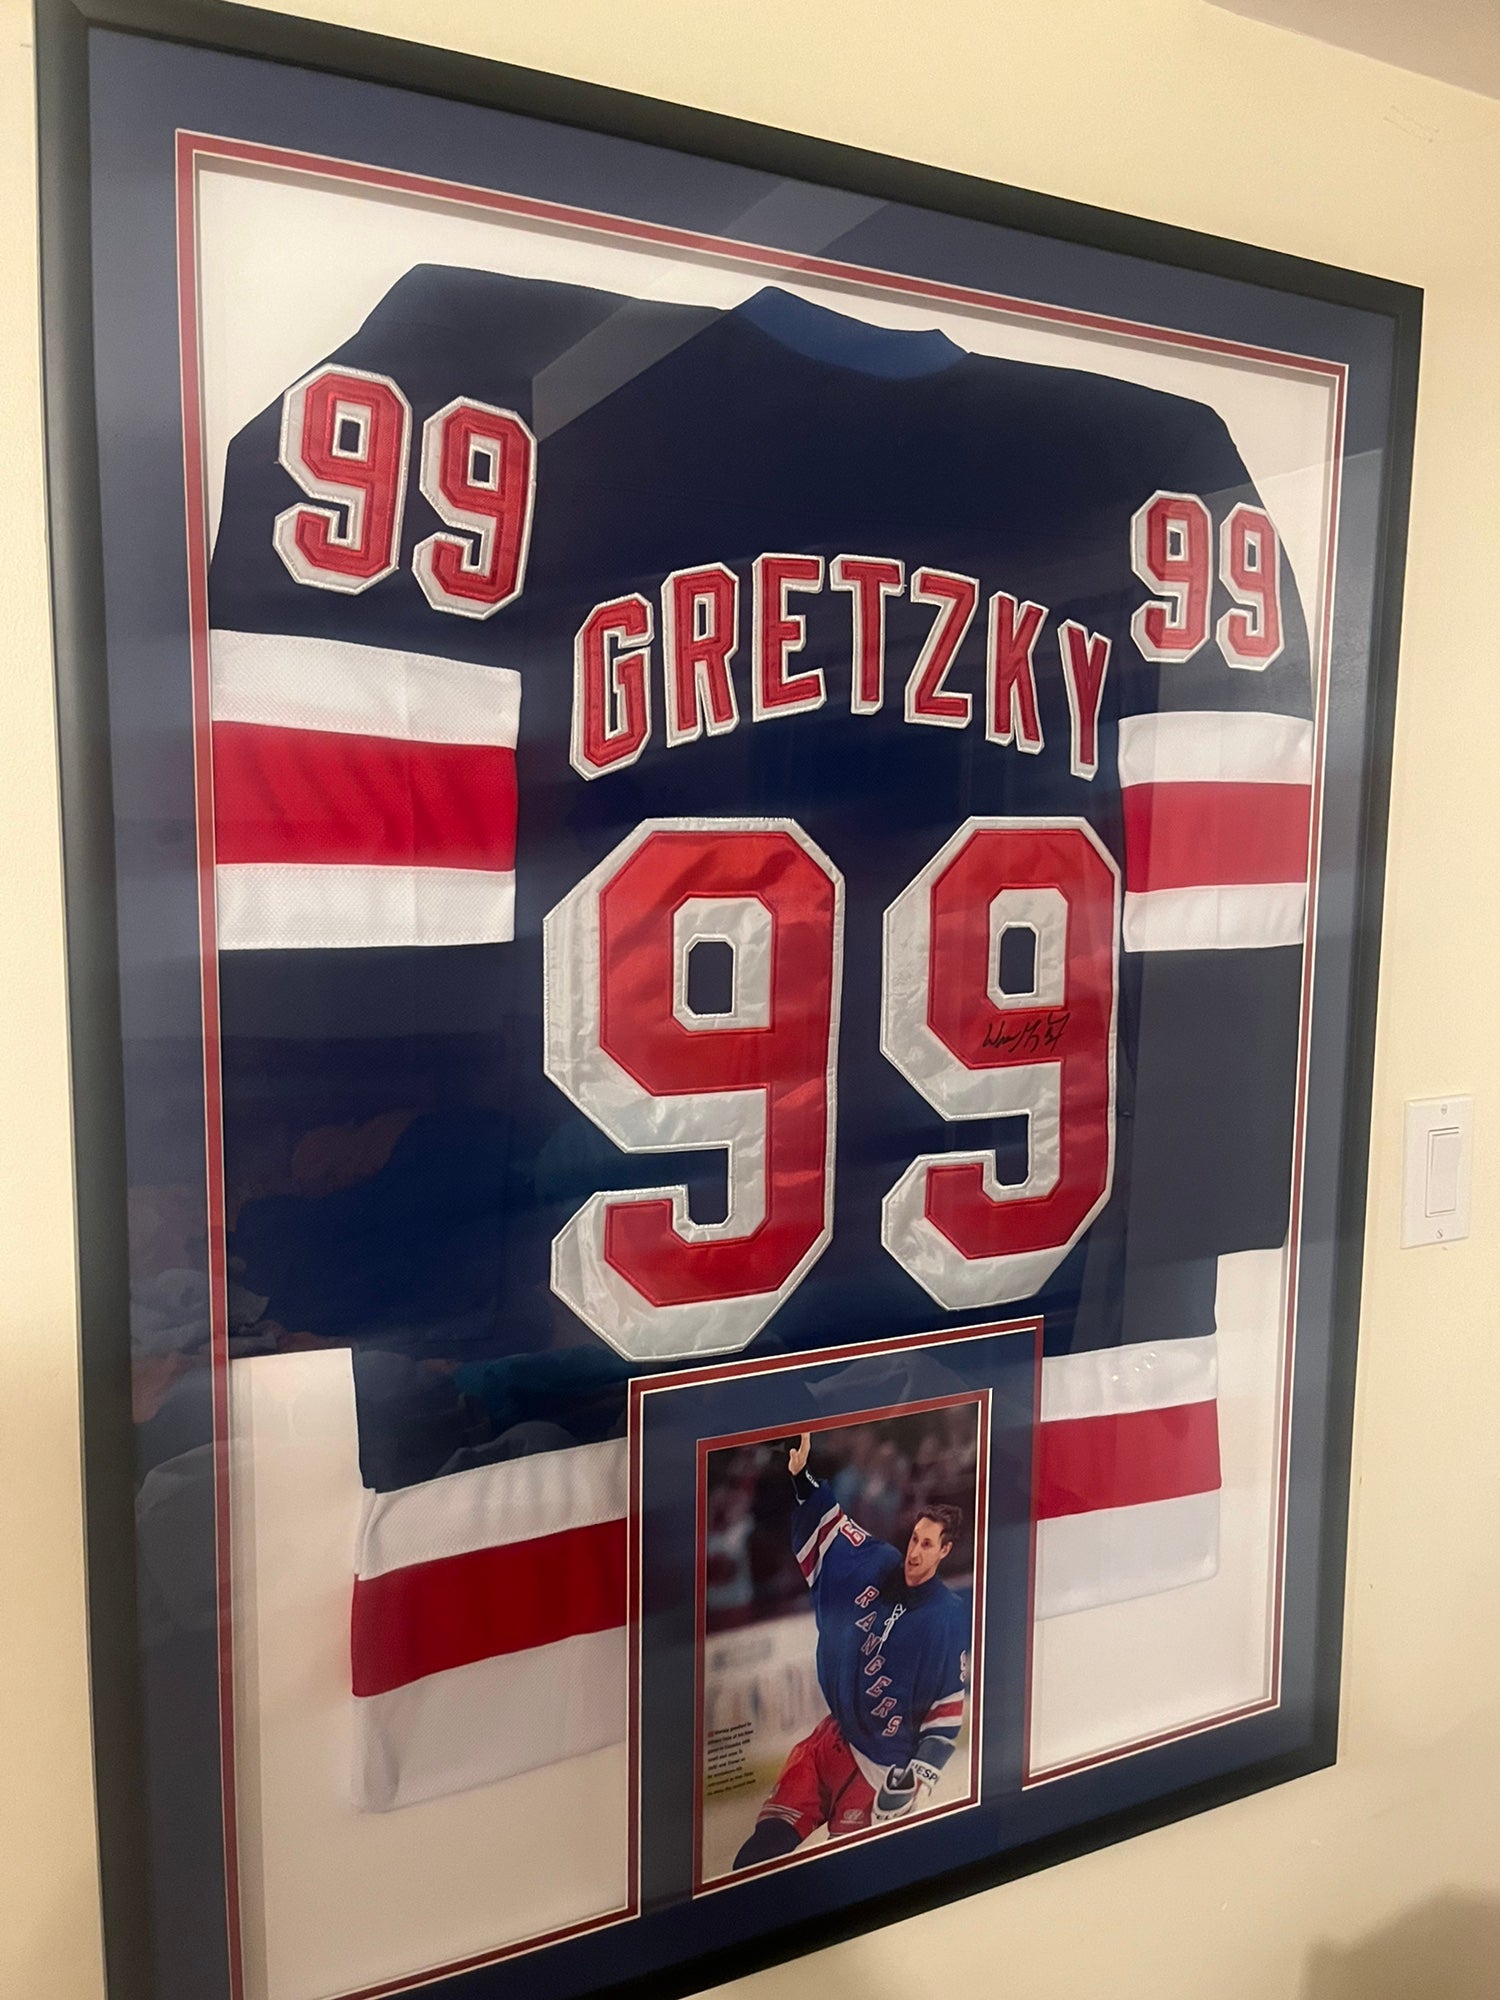 Wayne Gretzky Signed Home New York Rangers Jersey